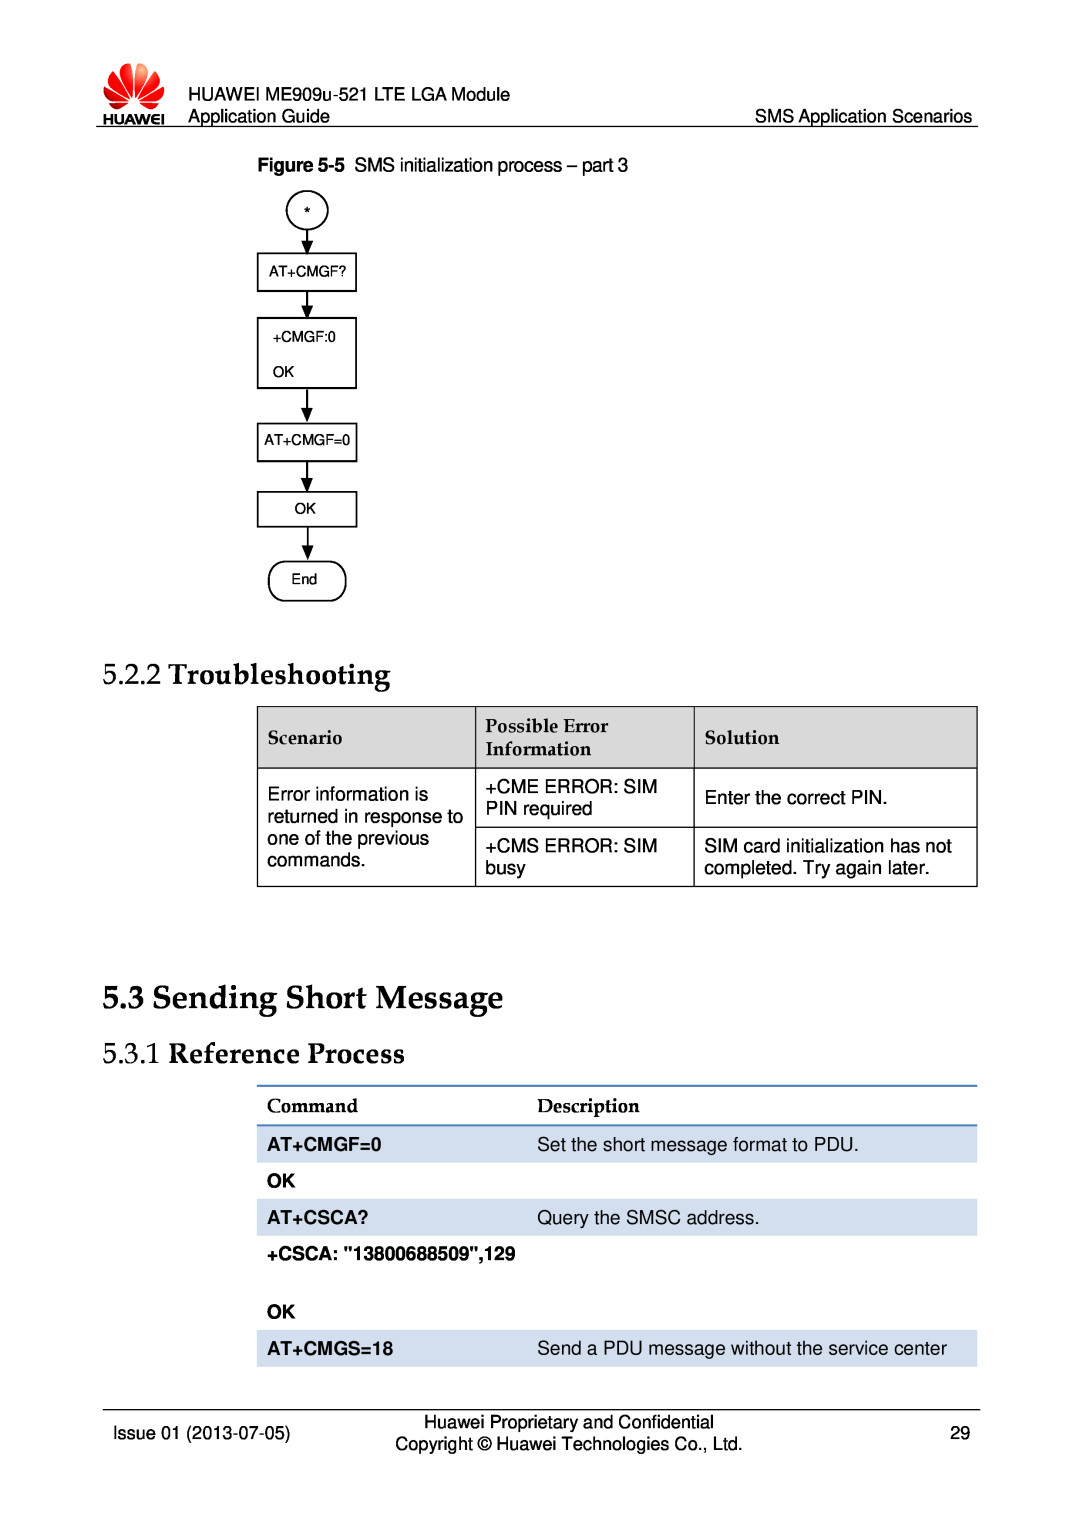 Huawei ME909u-521 manual Sending Short Message, Troubleshooting, Reference Process 